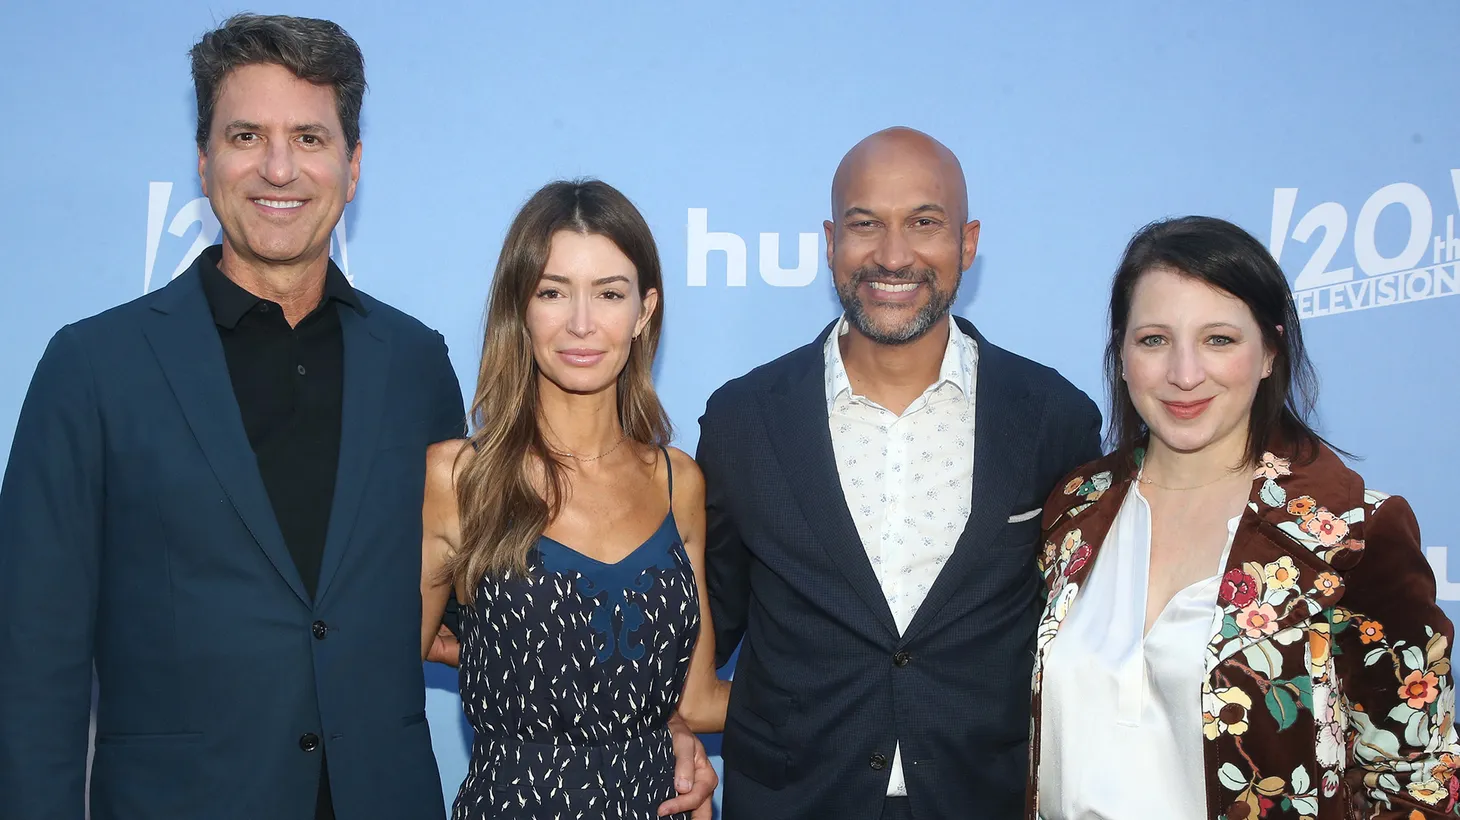 Steven Levitan (left), Kristina Levitan, Keegan-Michael Key, and Elle Key at the premiere of Hulu's “Reboot” at Fox Studios, in Los Angeles, on September 19, 2022.